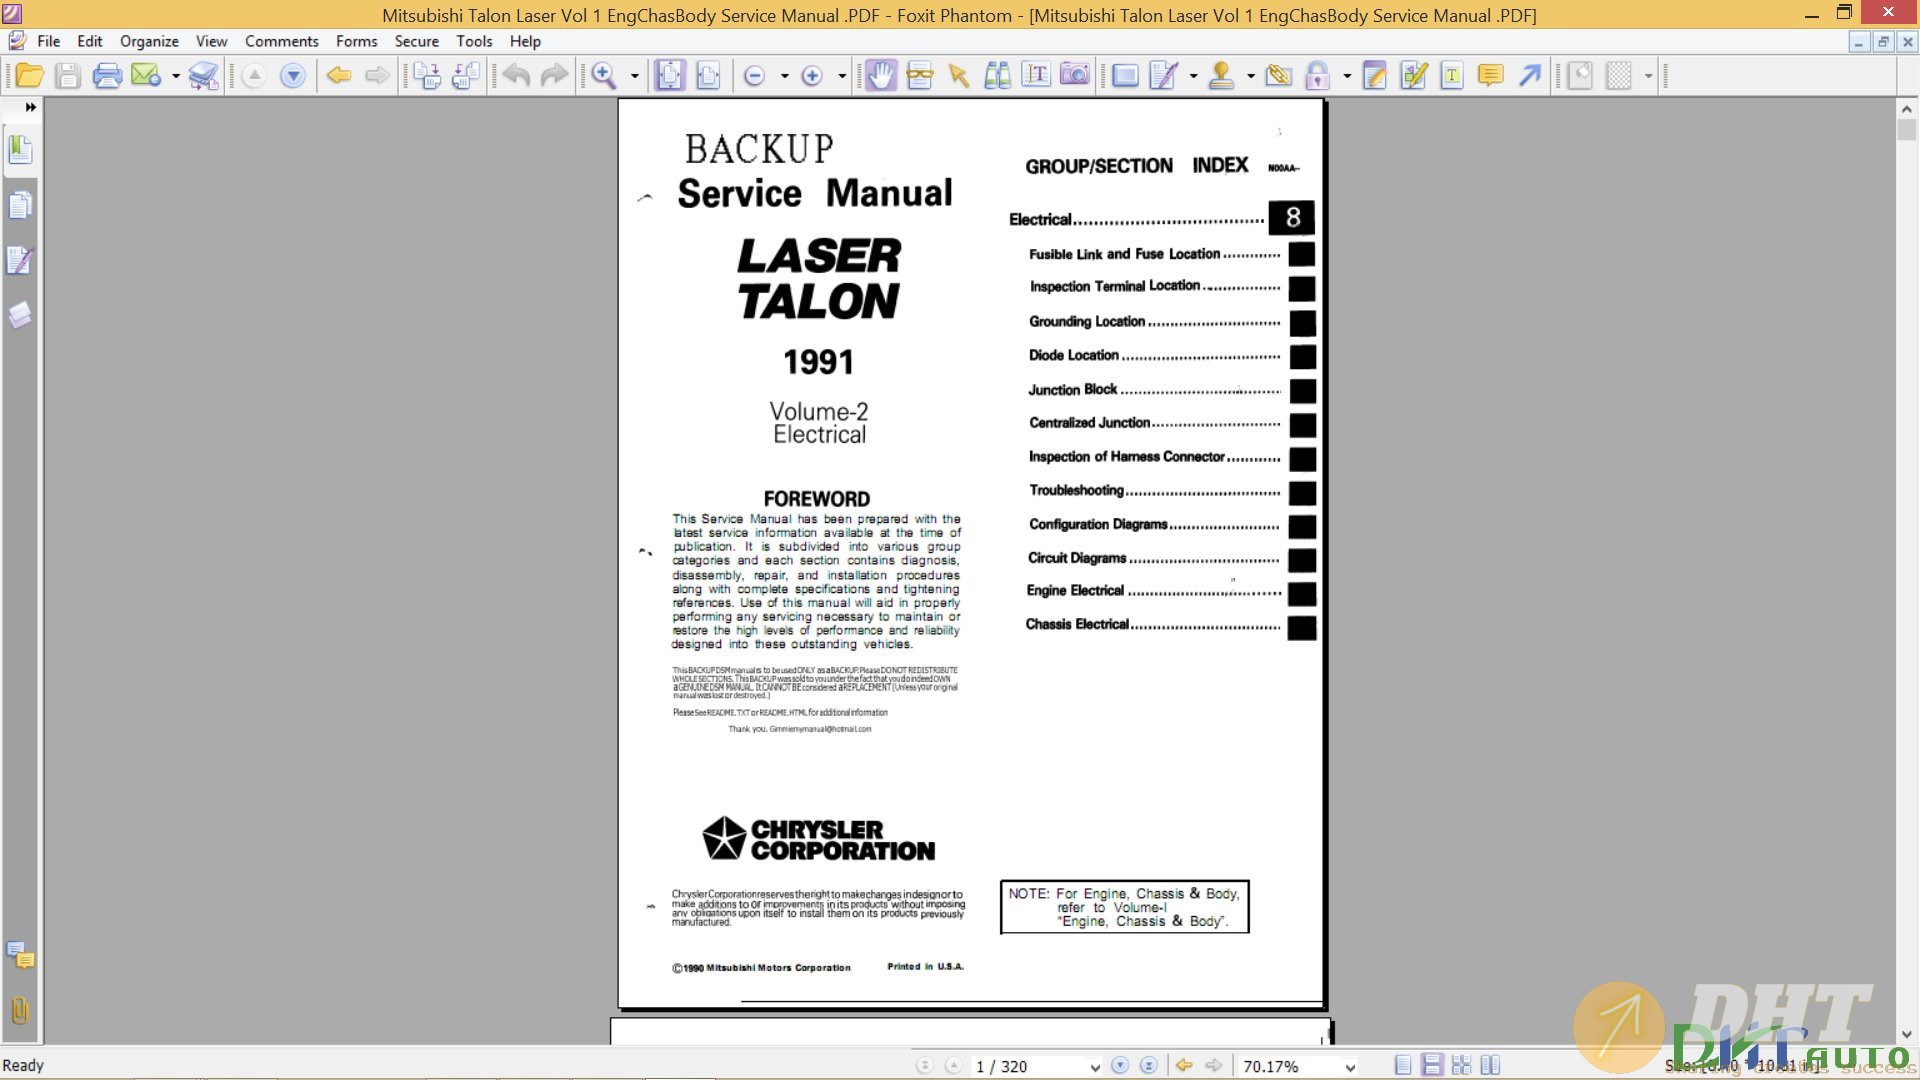 Mitsubishi_Talon_Laser_Vol2_Engchasbody_Service_Manual-1.jpg